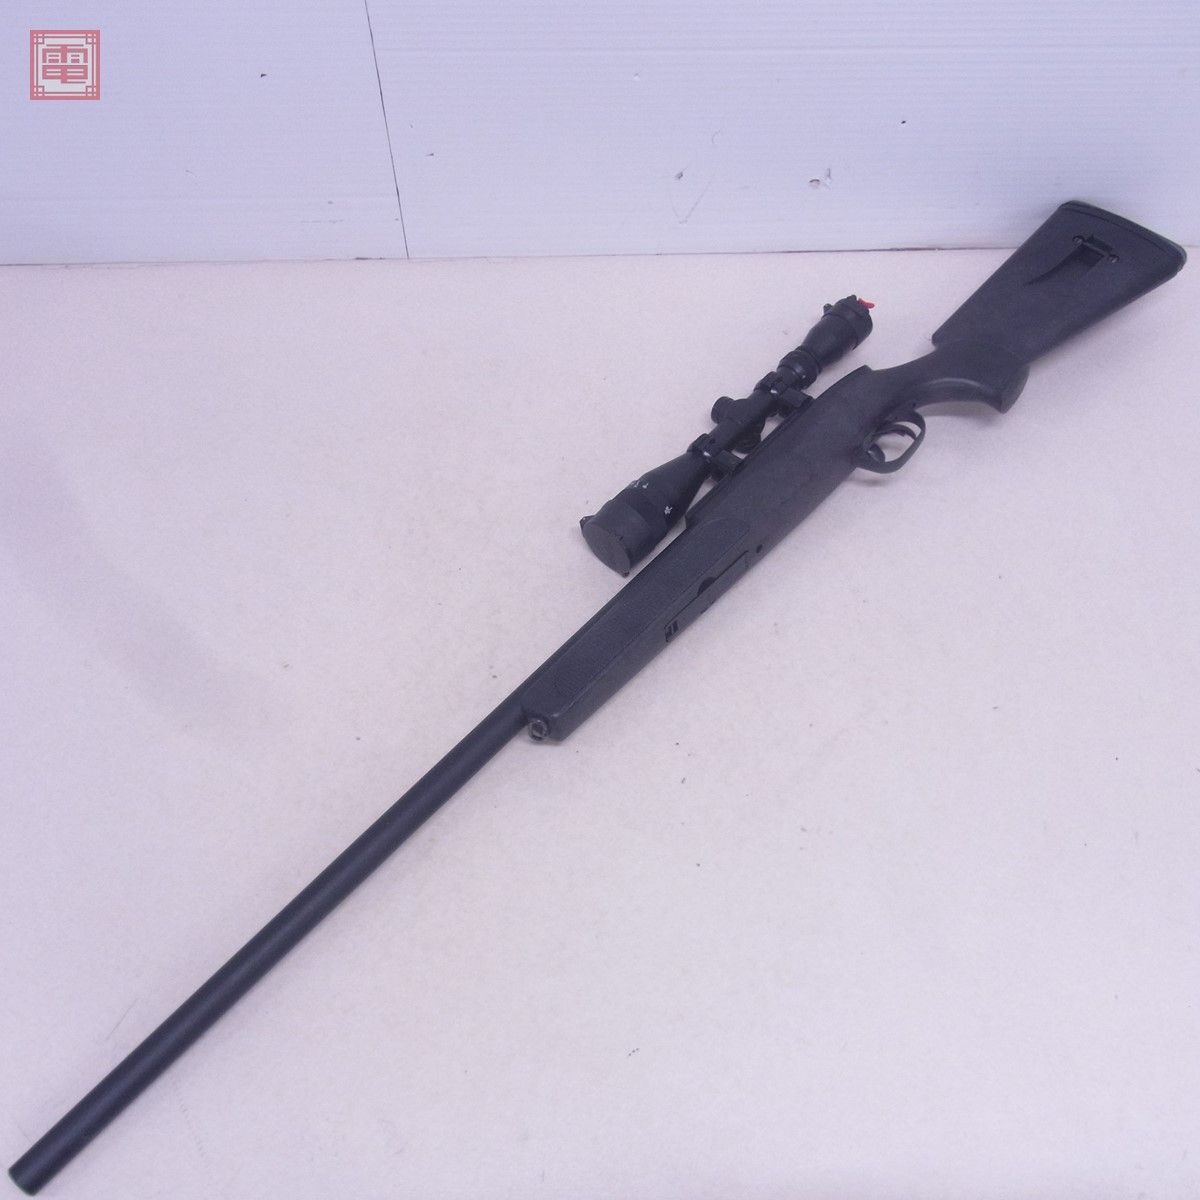  Maruzen air kokiAPS-2 bolt action rifle scope attaching present condition goods [60